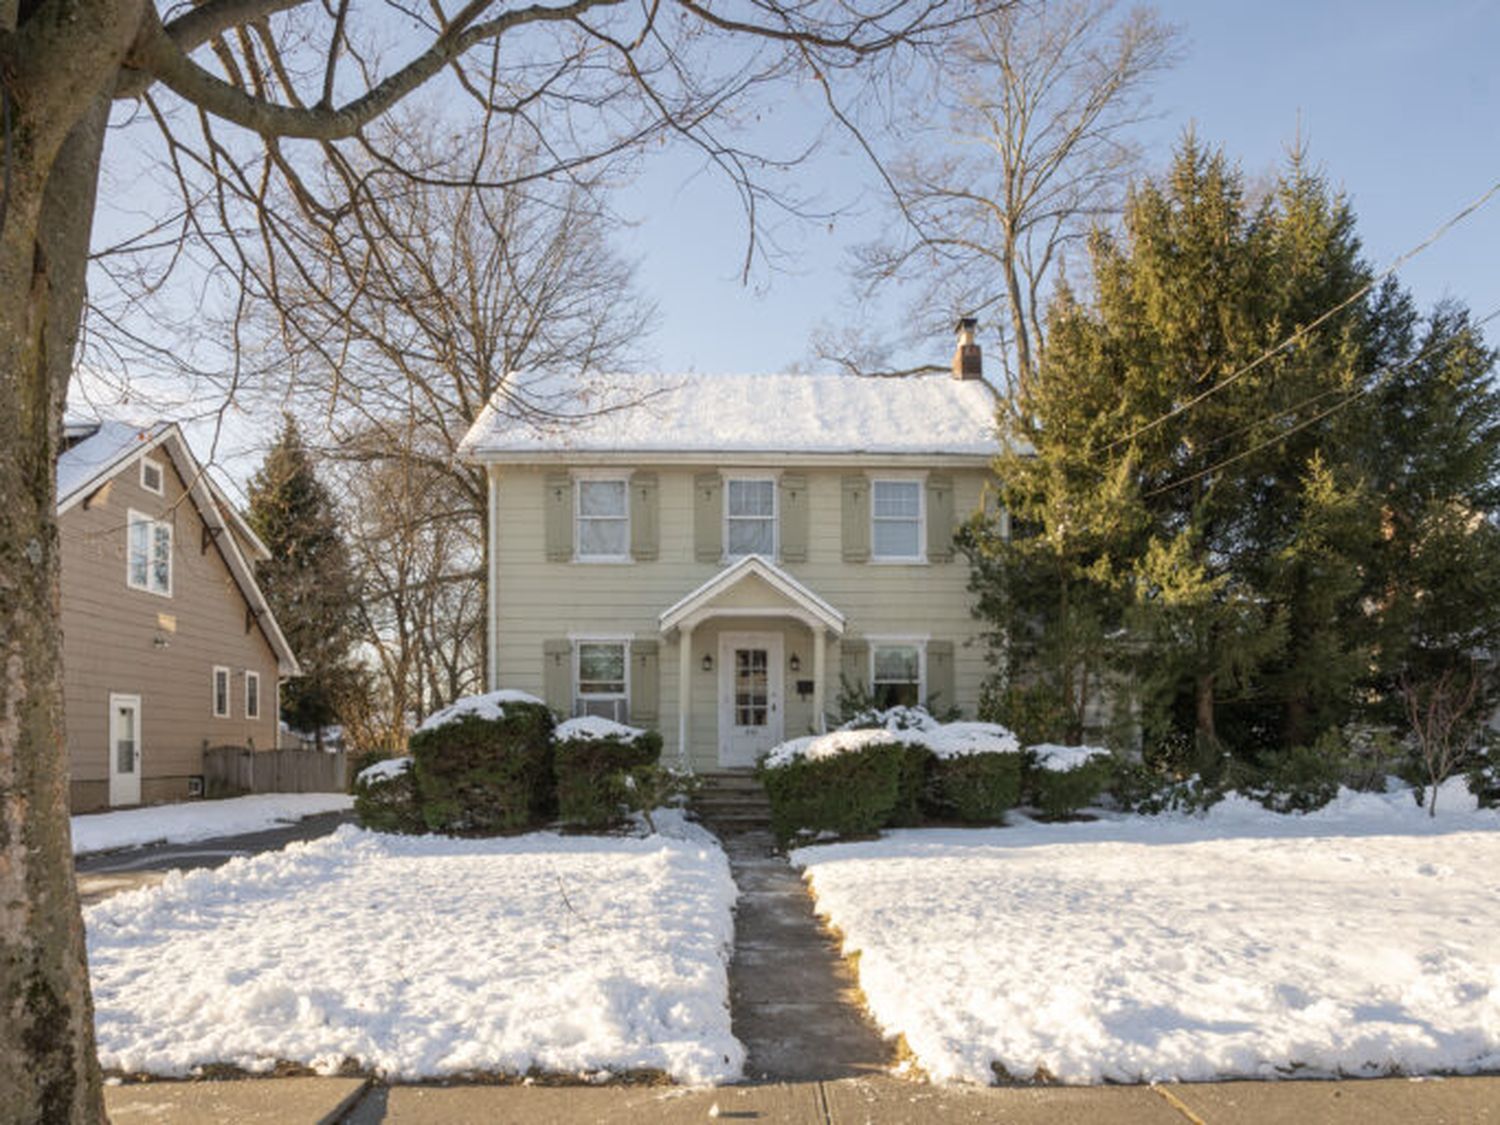 Ridgewood NJ season 46 house in winter